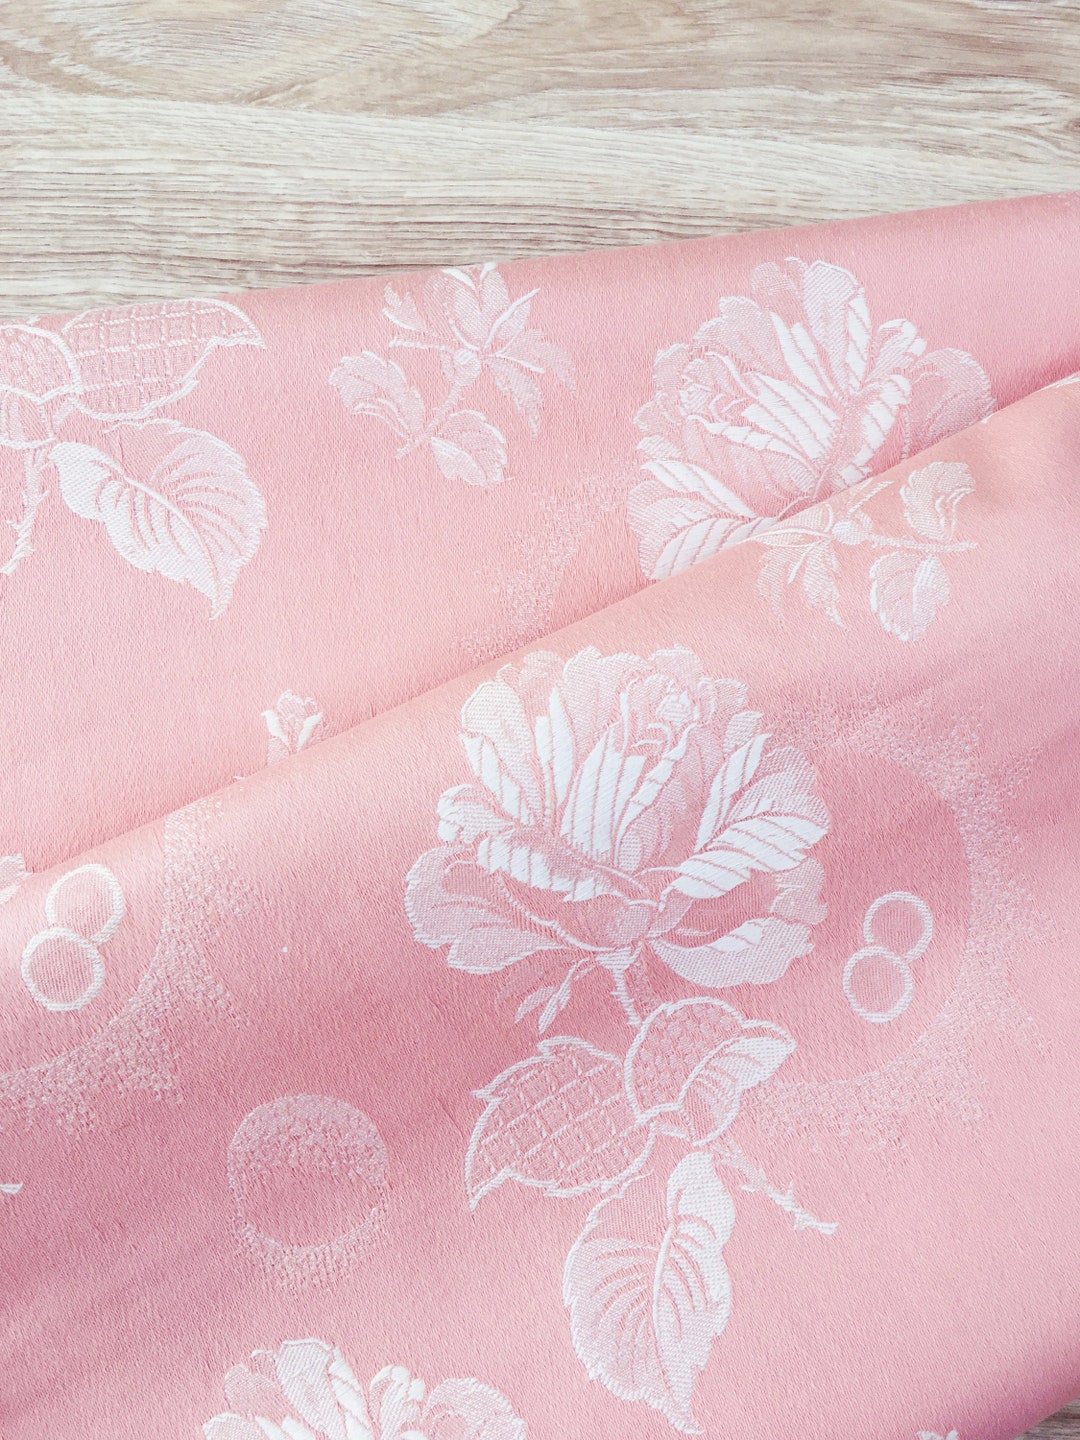 ROSE Pink Rare Floral Antique Ticking Fabric 1950s European - Etsy